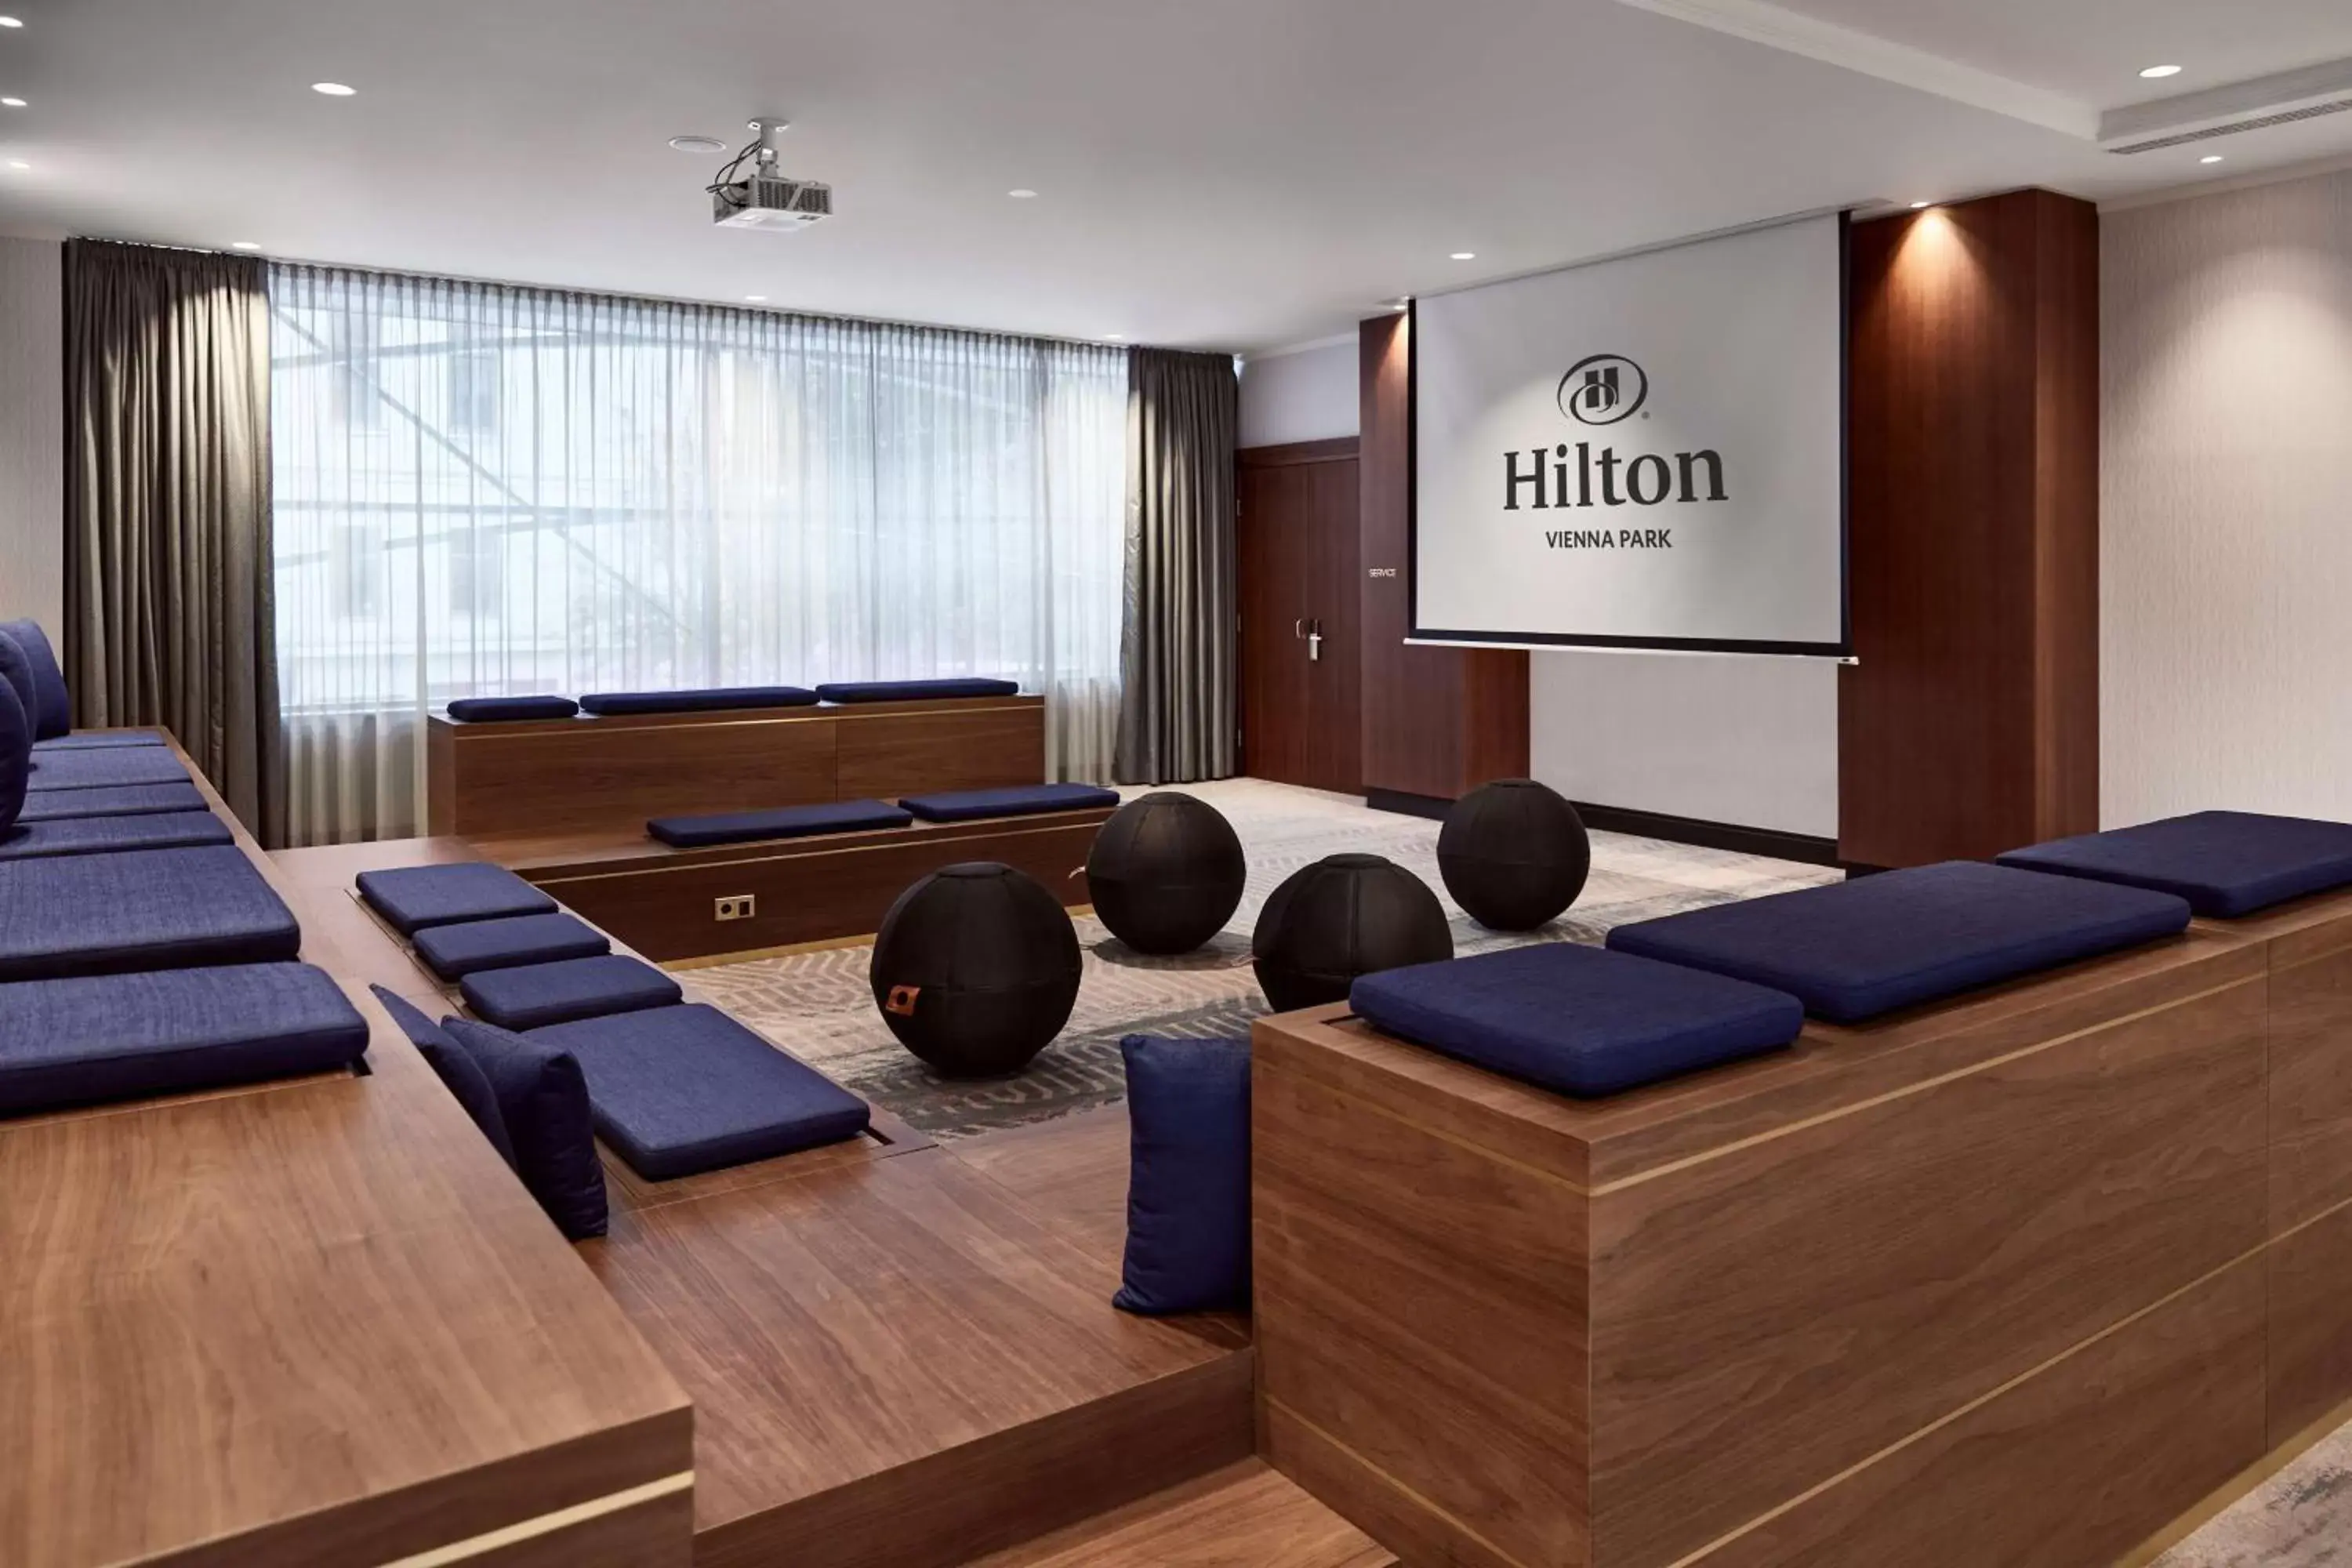 Lobby or reception in Hilton Vienna Park